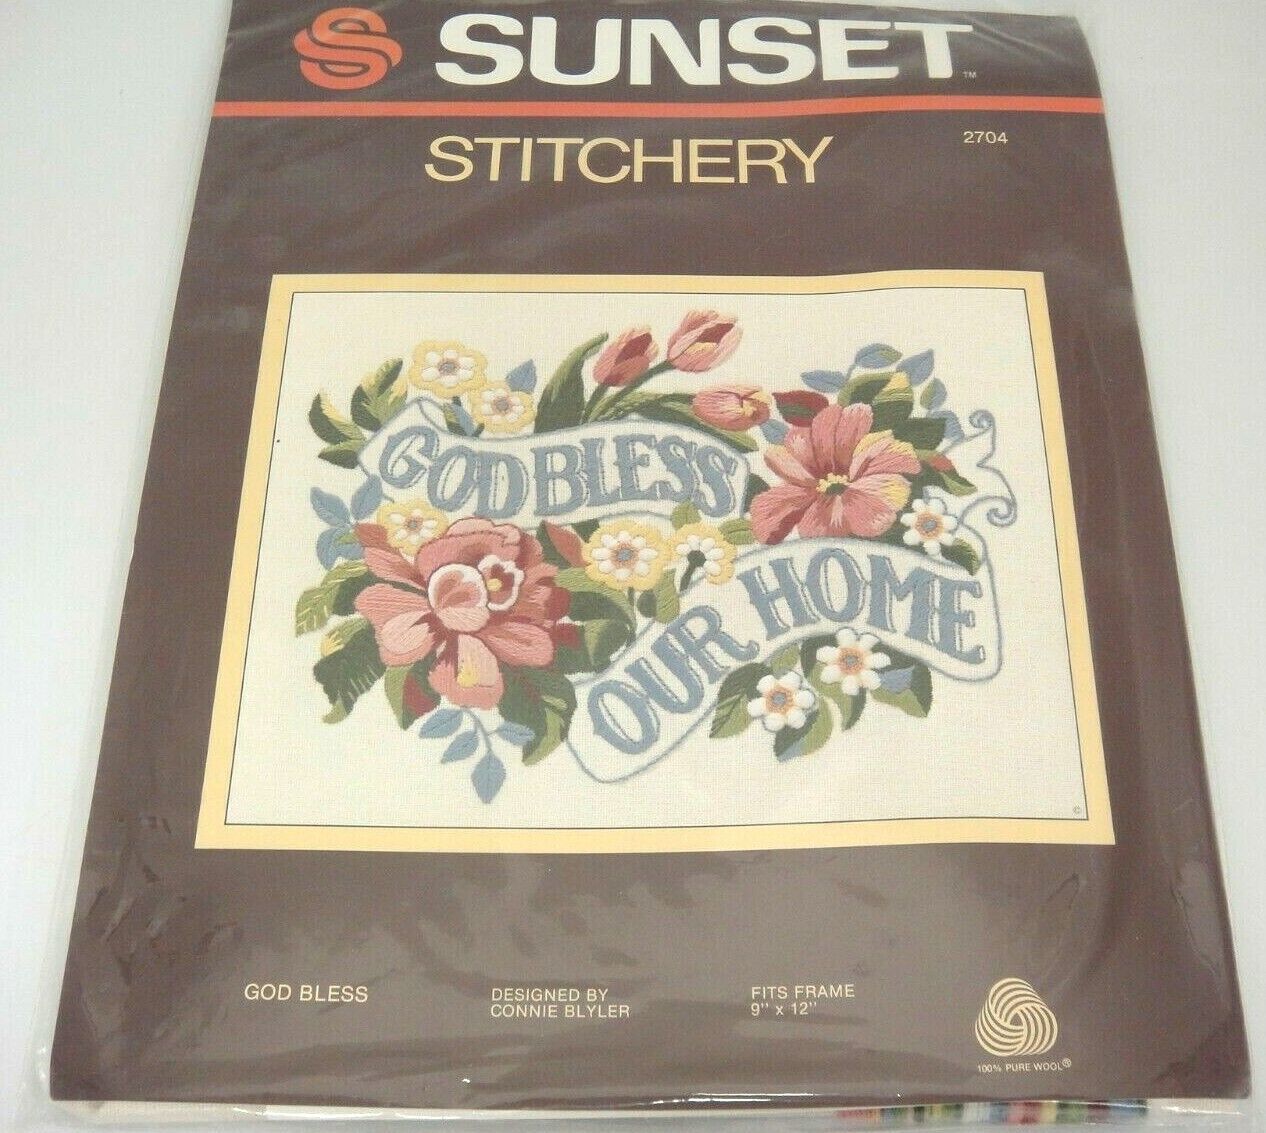 Vtg Sunset Stitchery Kit 2704 God Bless Our Home by Connie Blyler 9" x 12" 1982 - $9.40